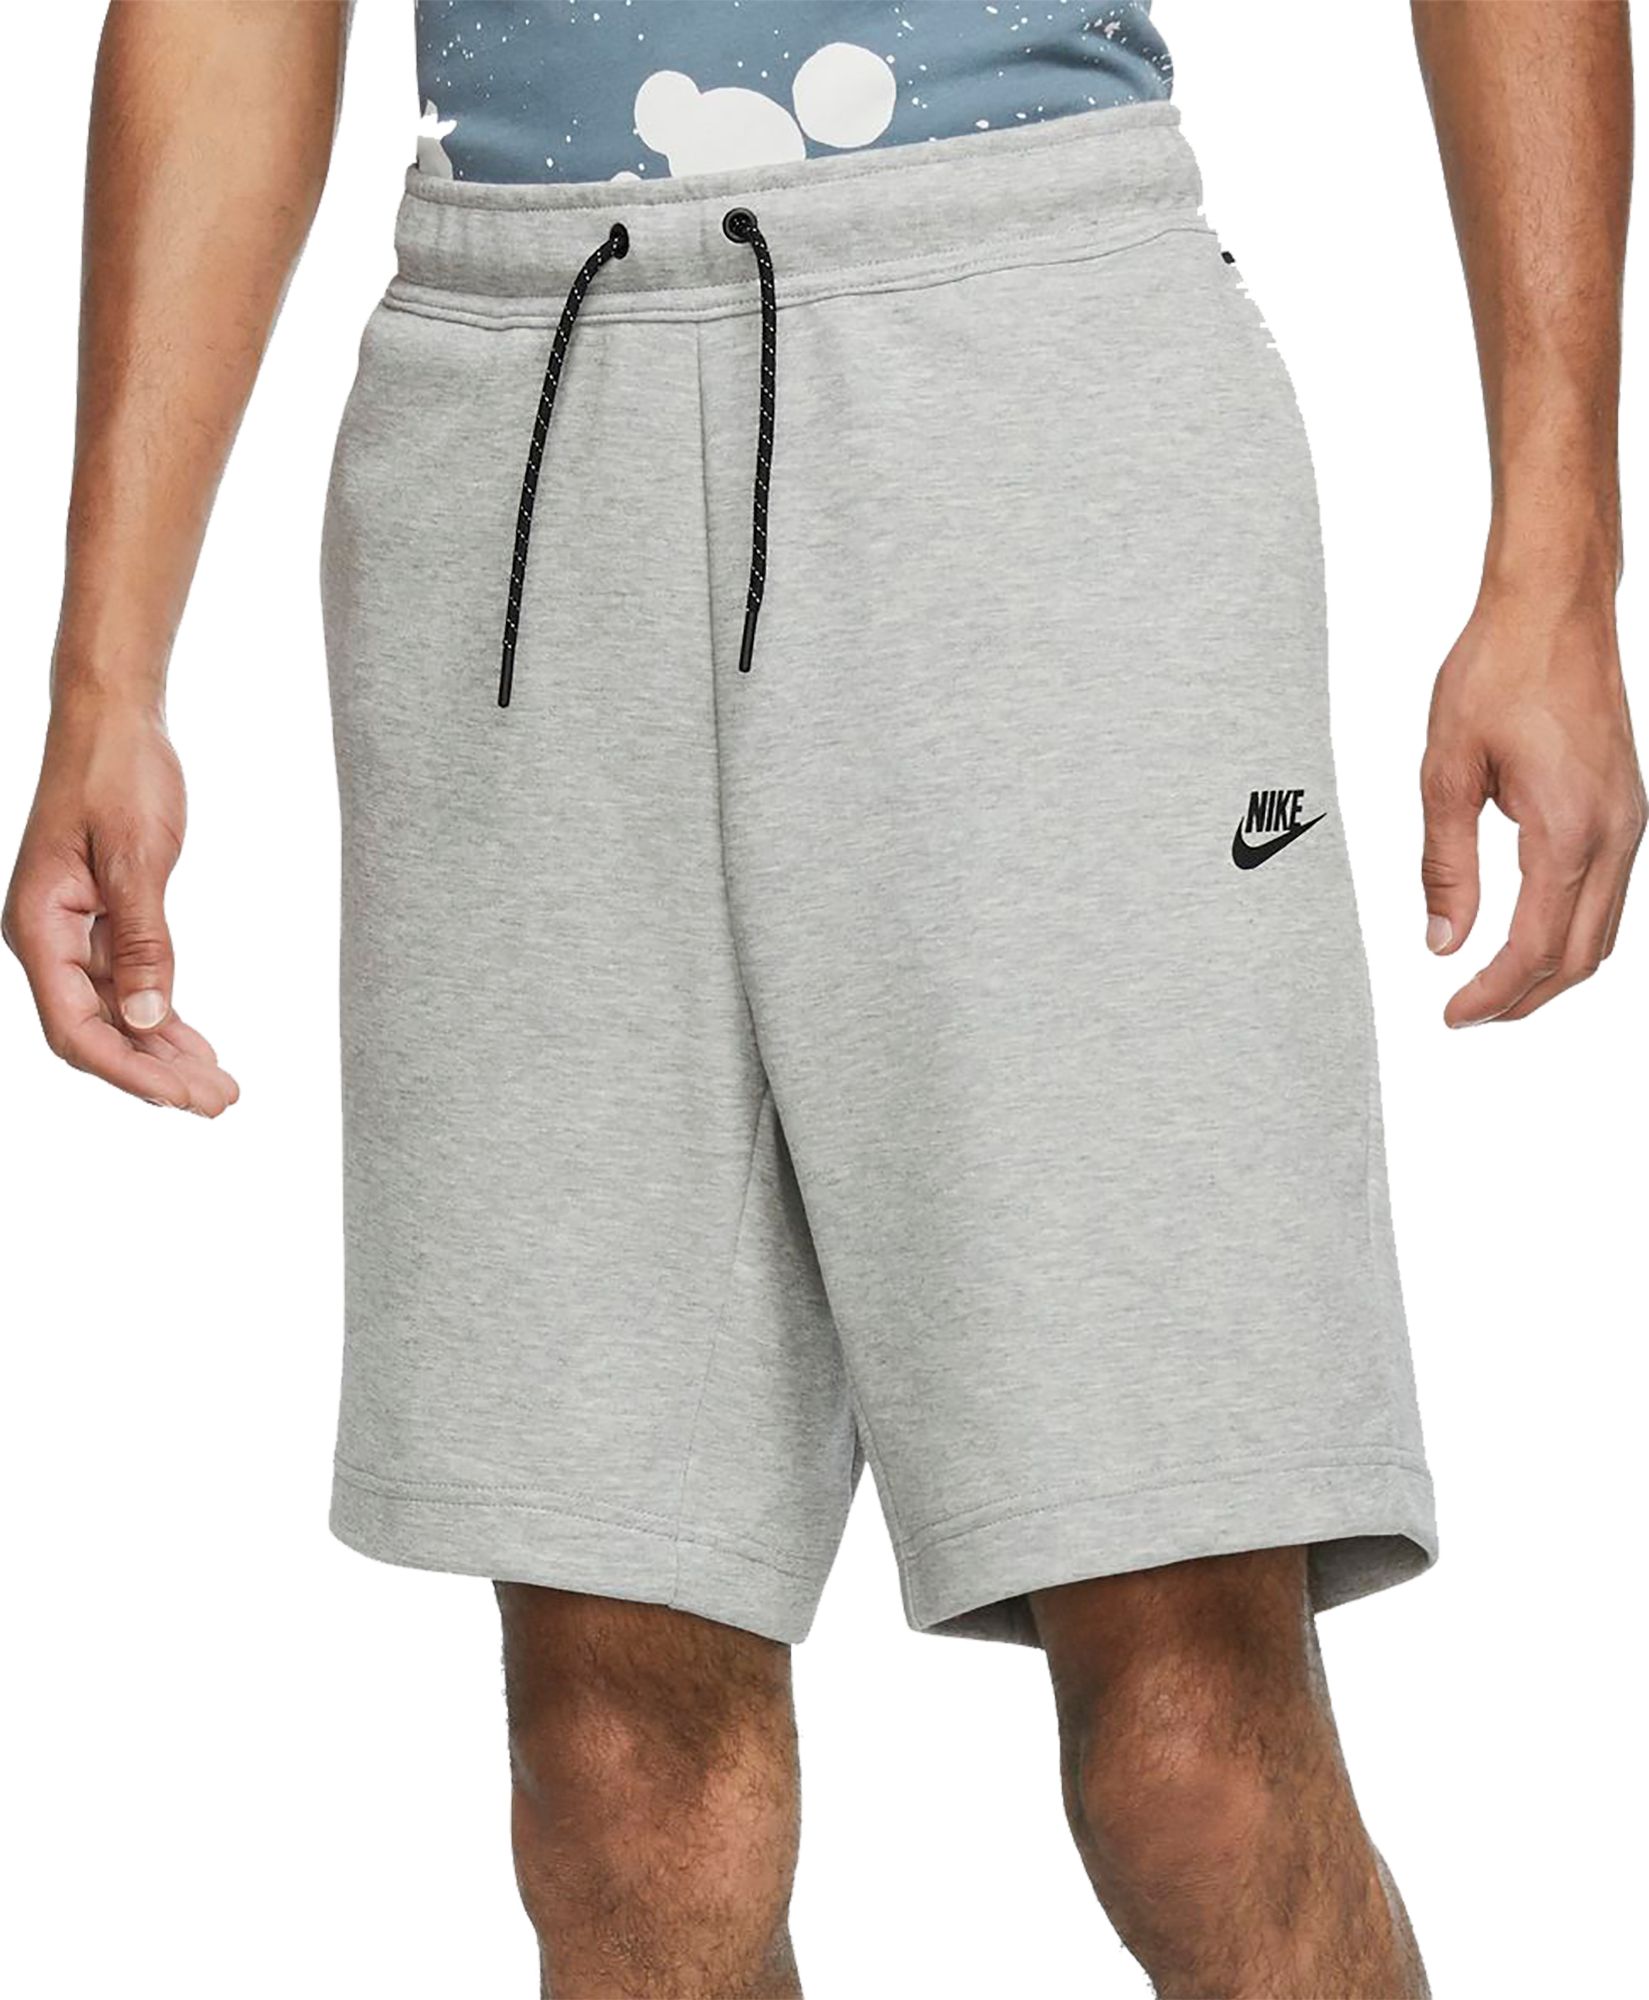 nike grey sweatpants shorts